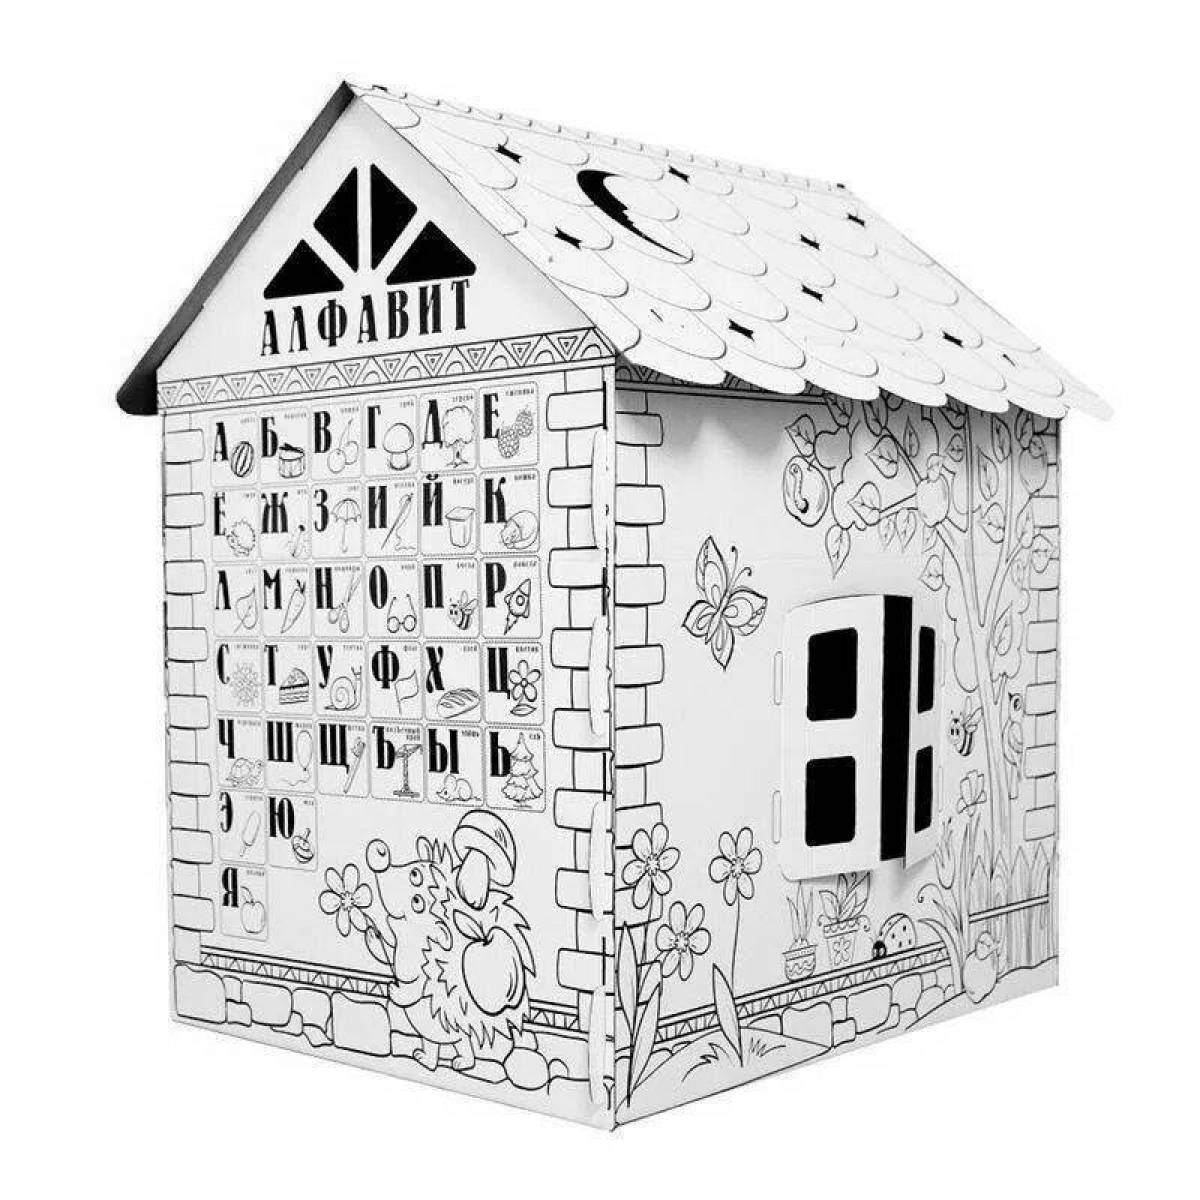 Cardboard house for kids #1